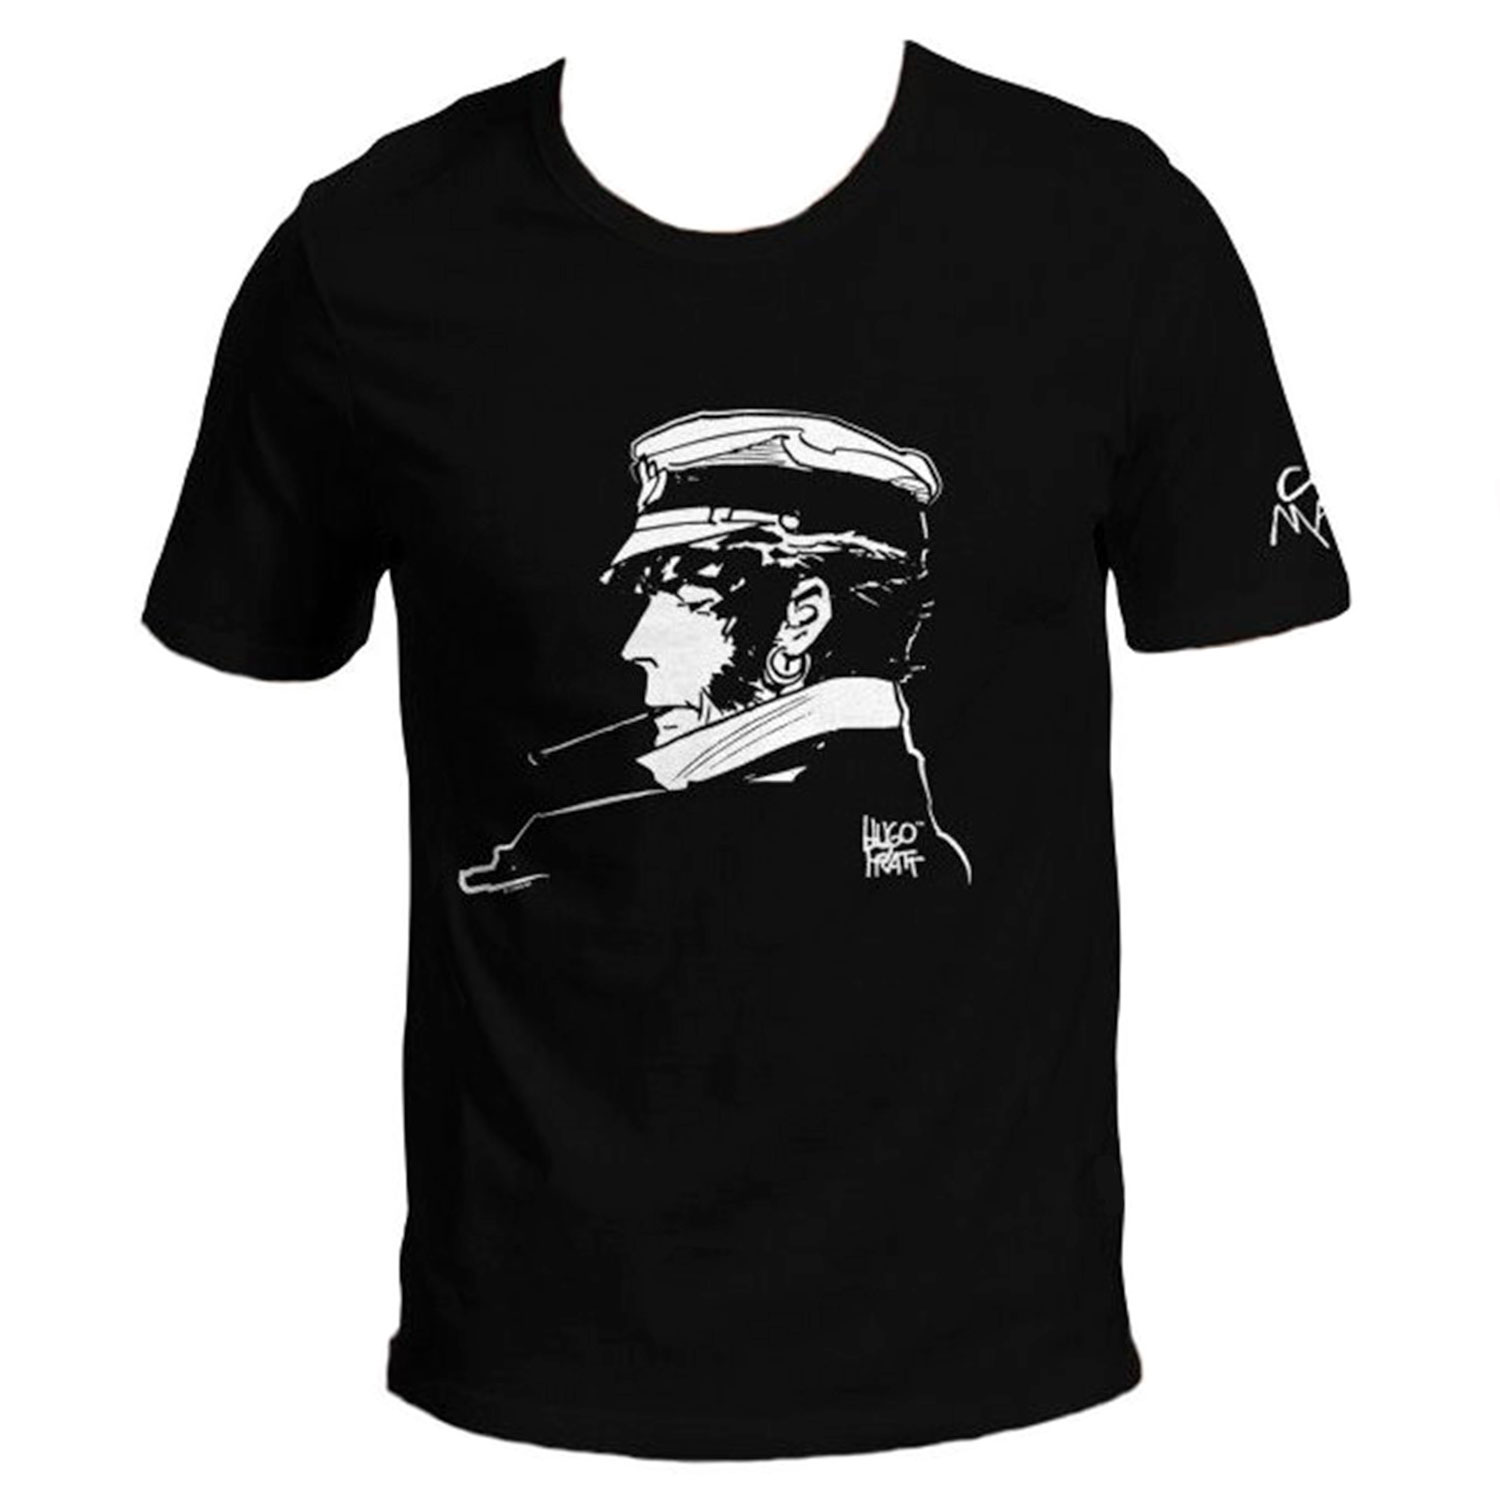 T-shirt Hugo Pratt : Corto Maltese , Cigarette (noir)